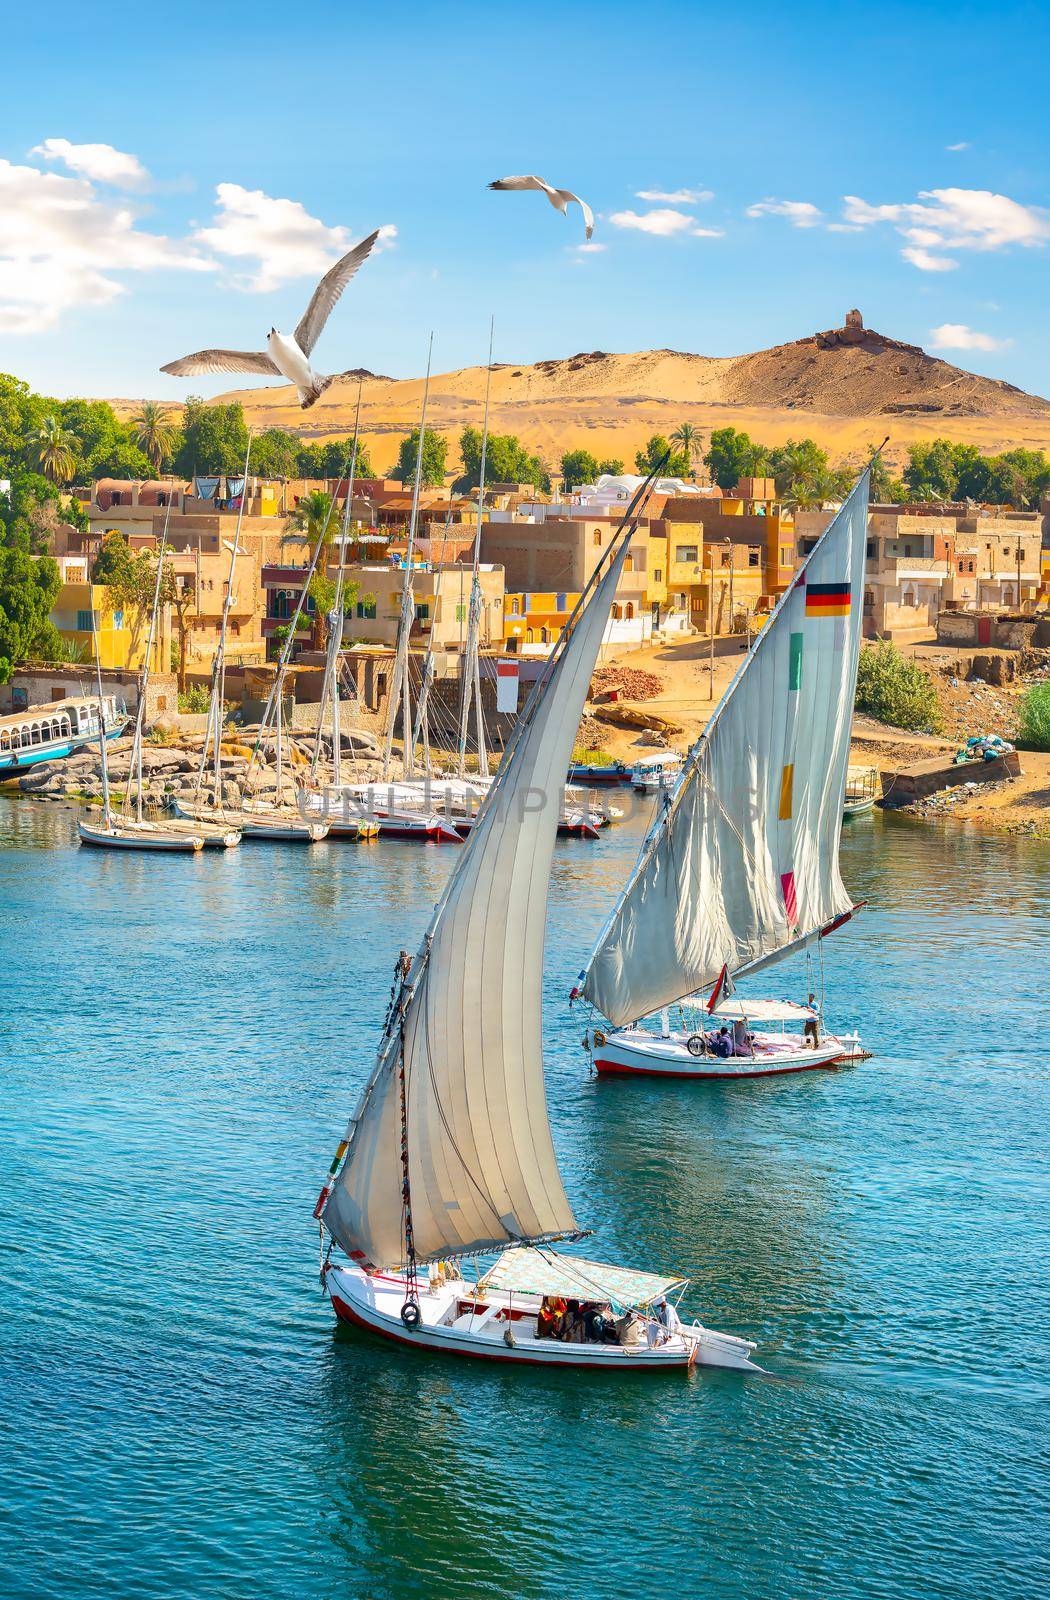 Seagulls over sailboats in sunny Aswan, Egypt